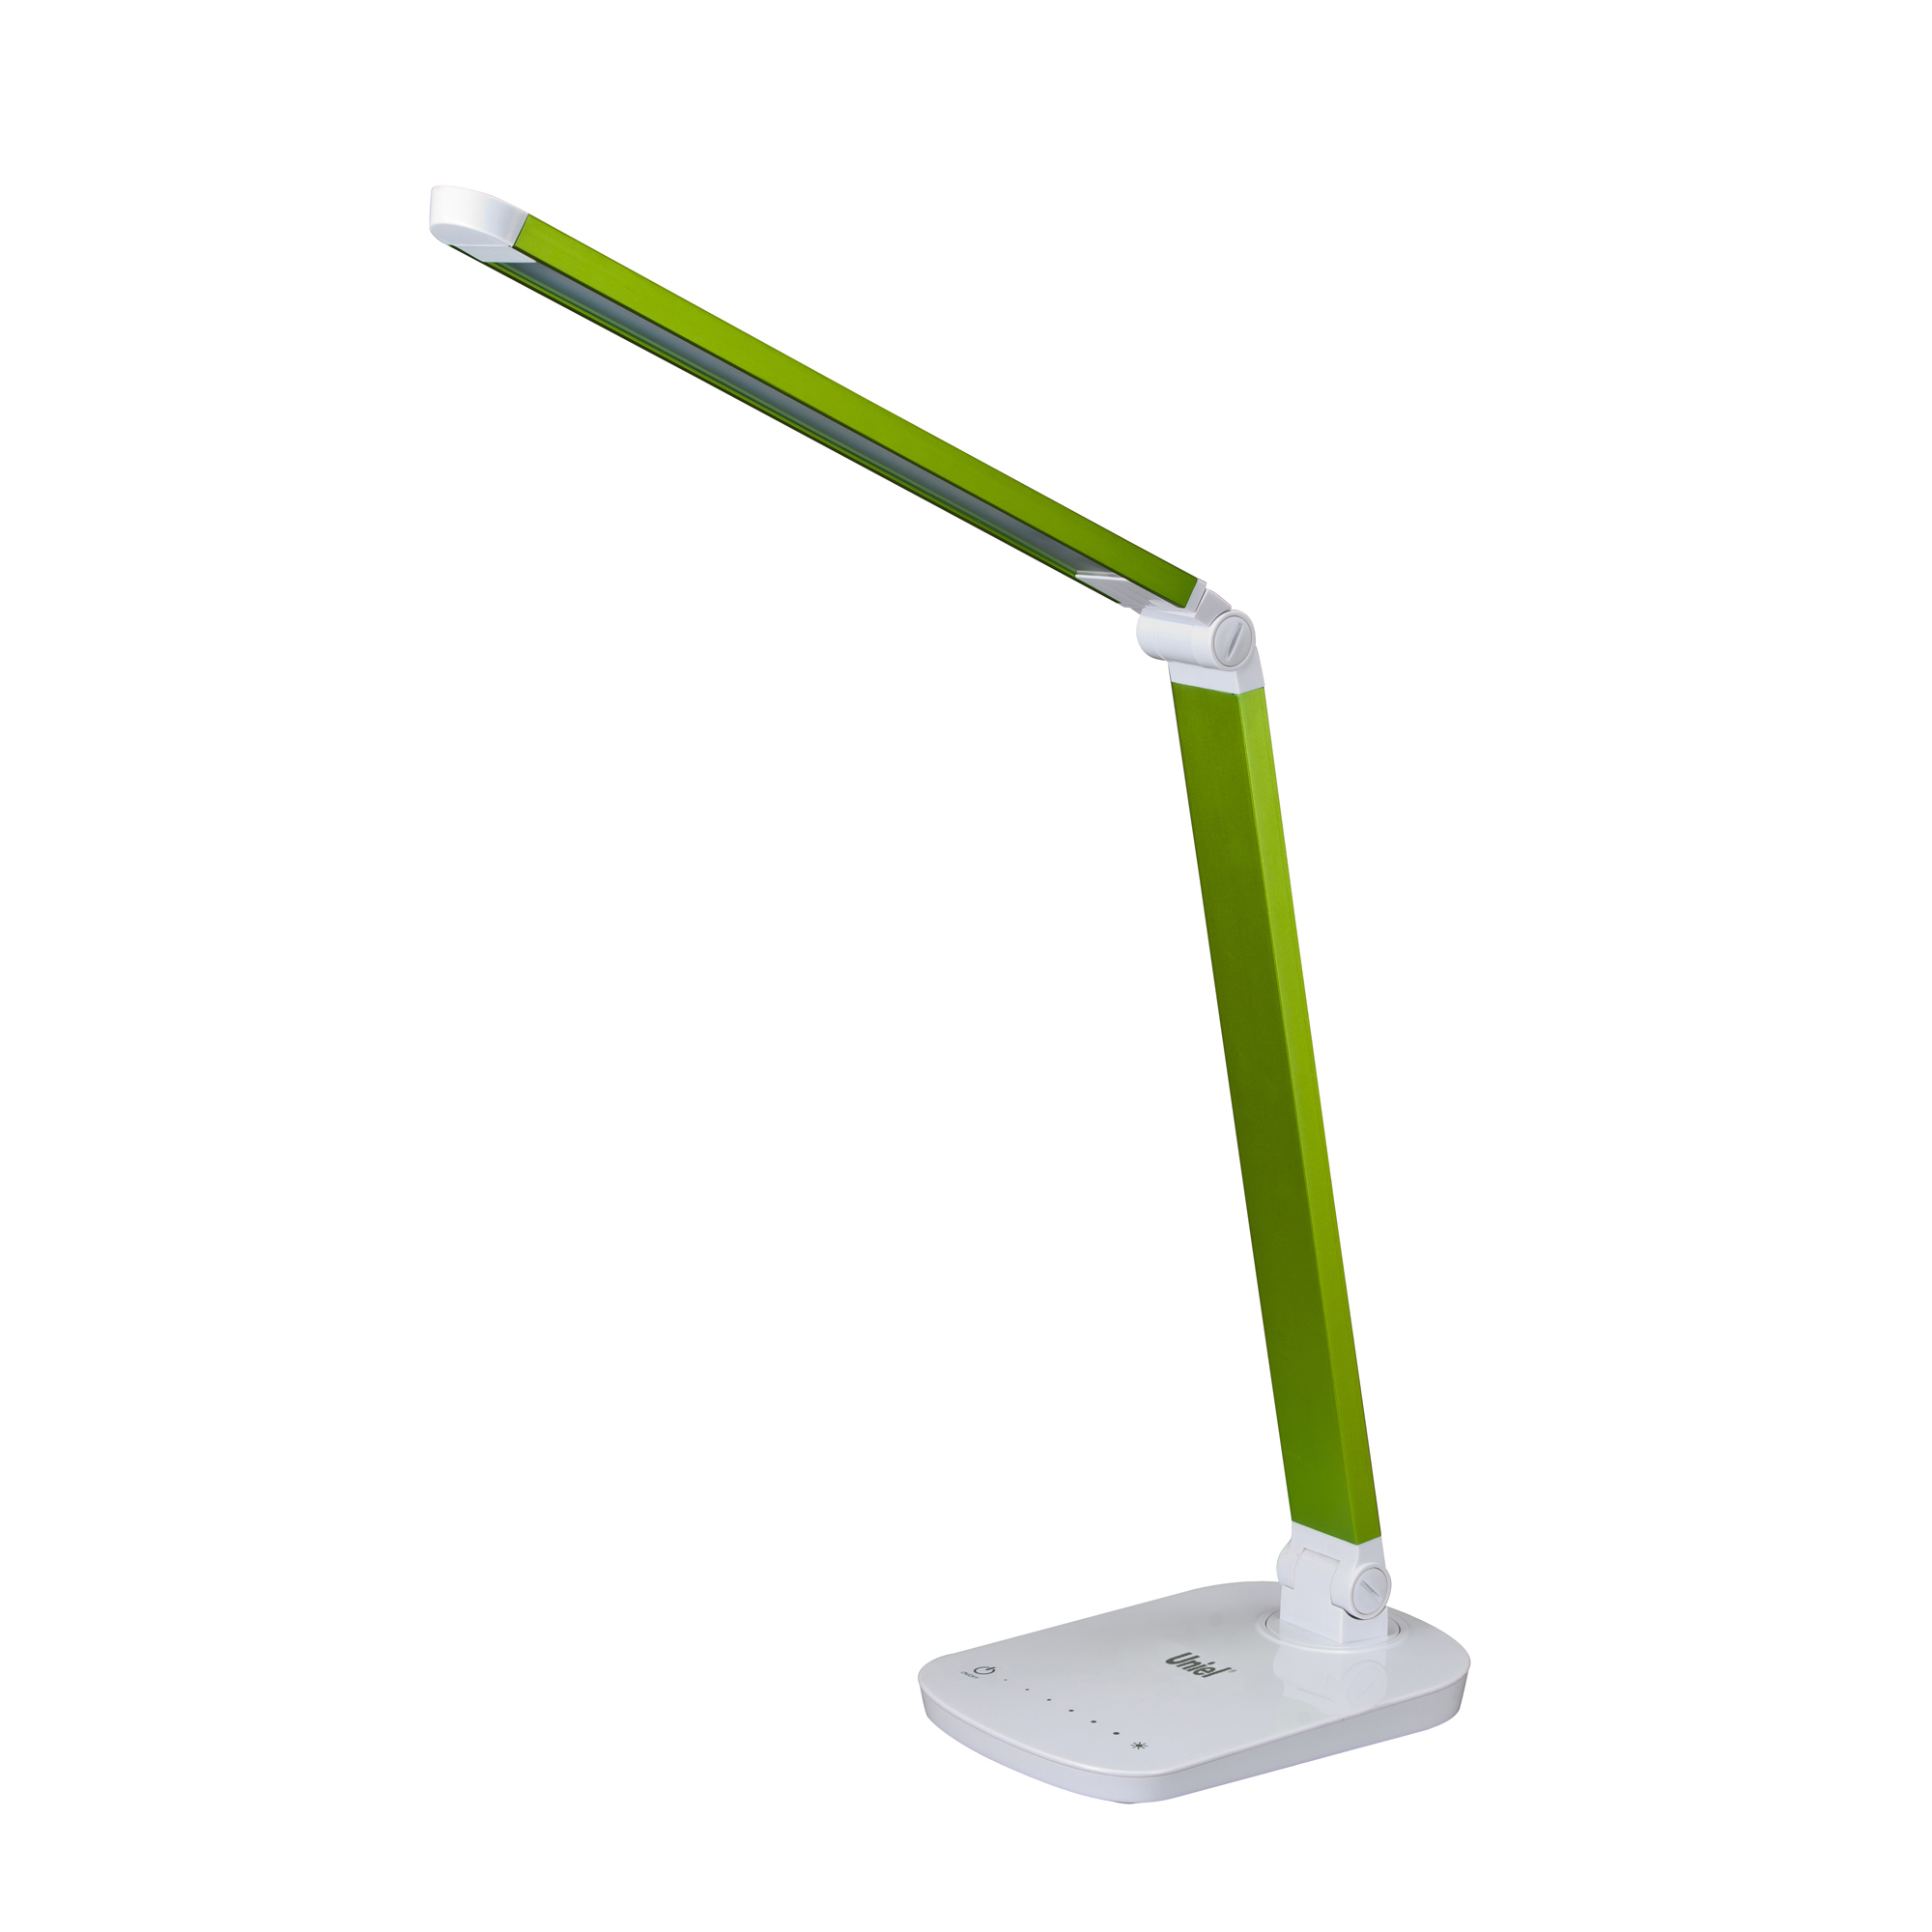 TLD-521 Green-8W-Светильник настольный-LED-800Lm-5000K-Dimmer-Цвет-зеленый металлик